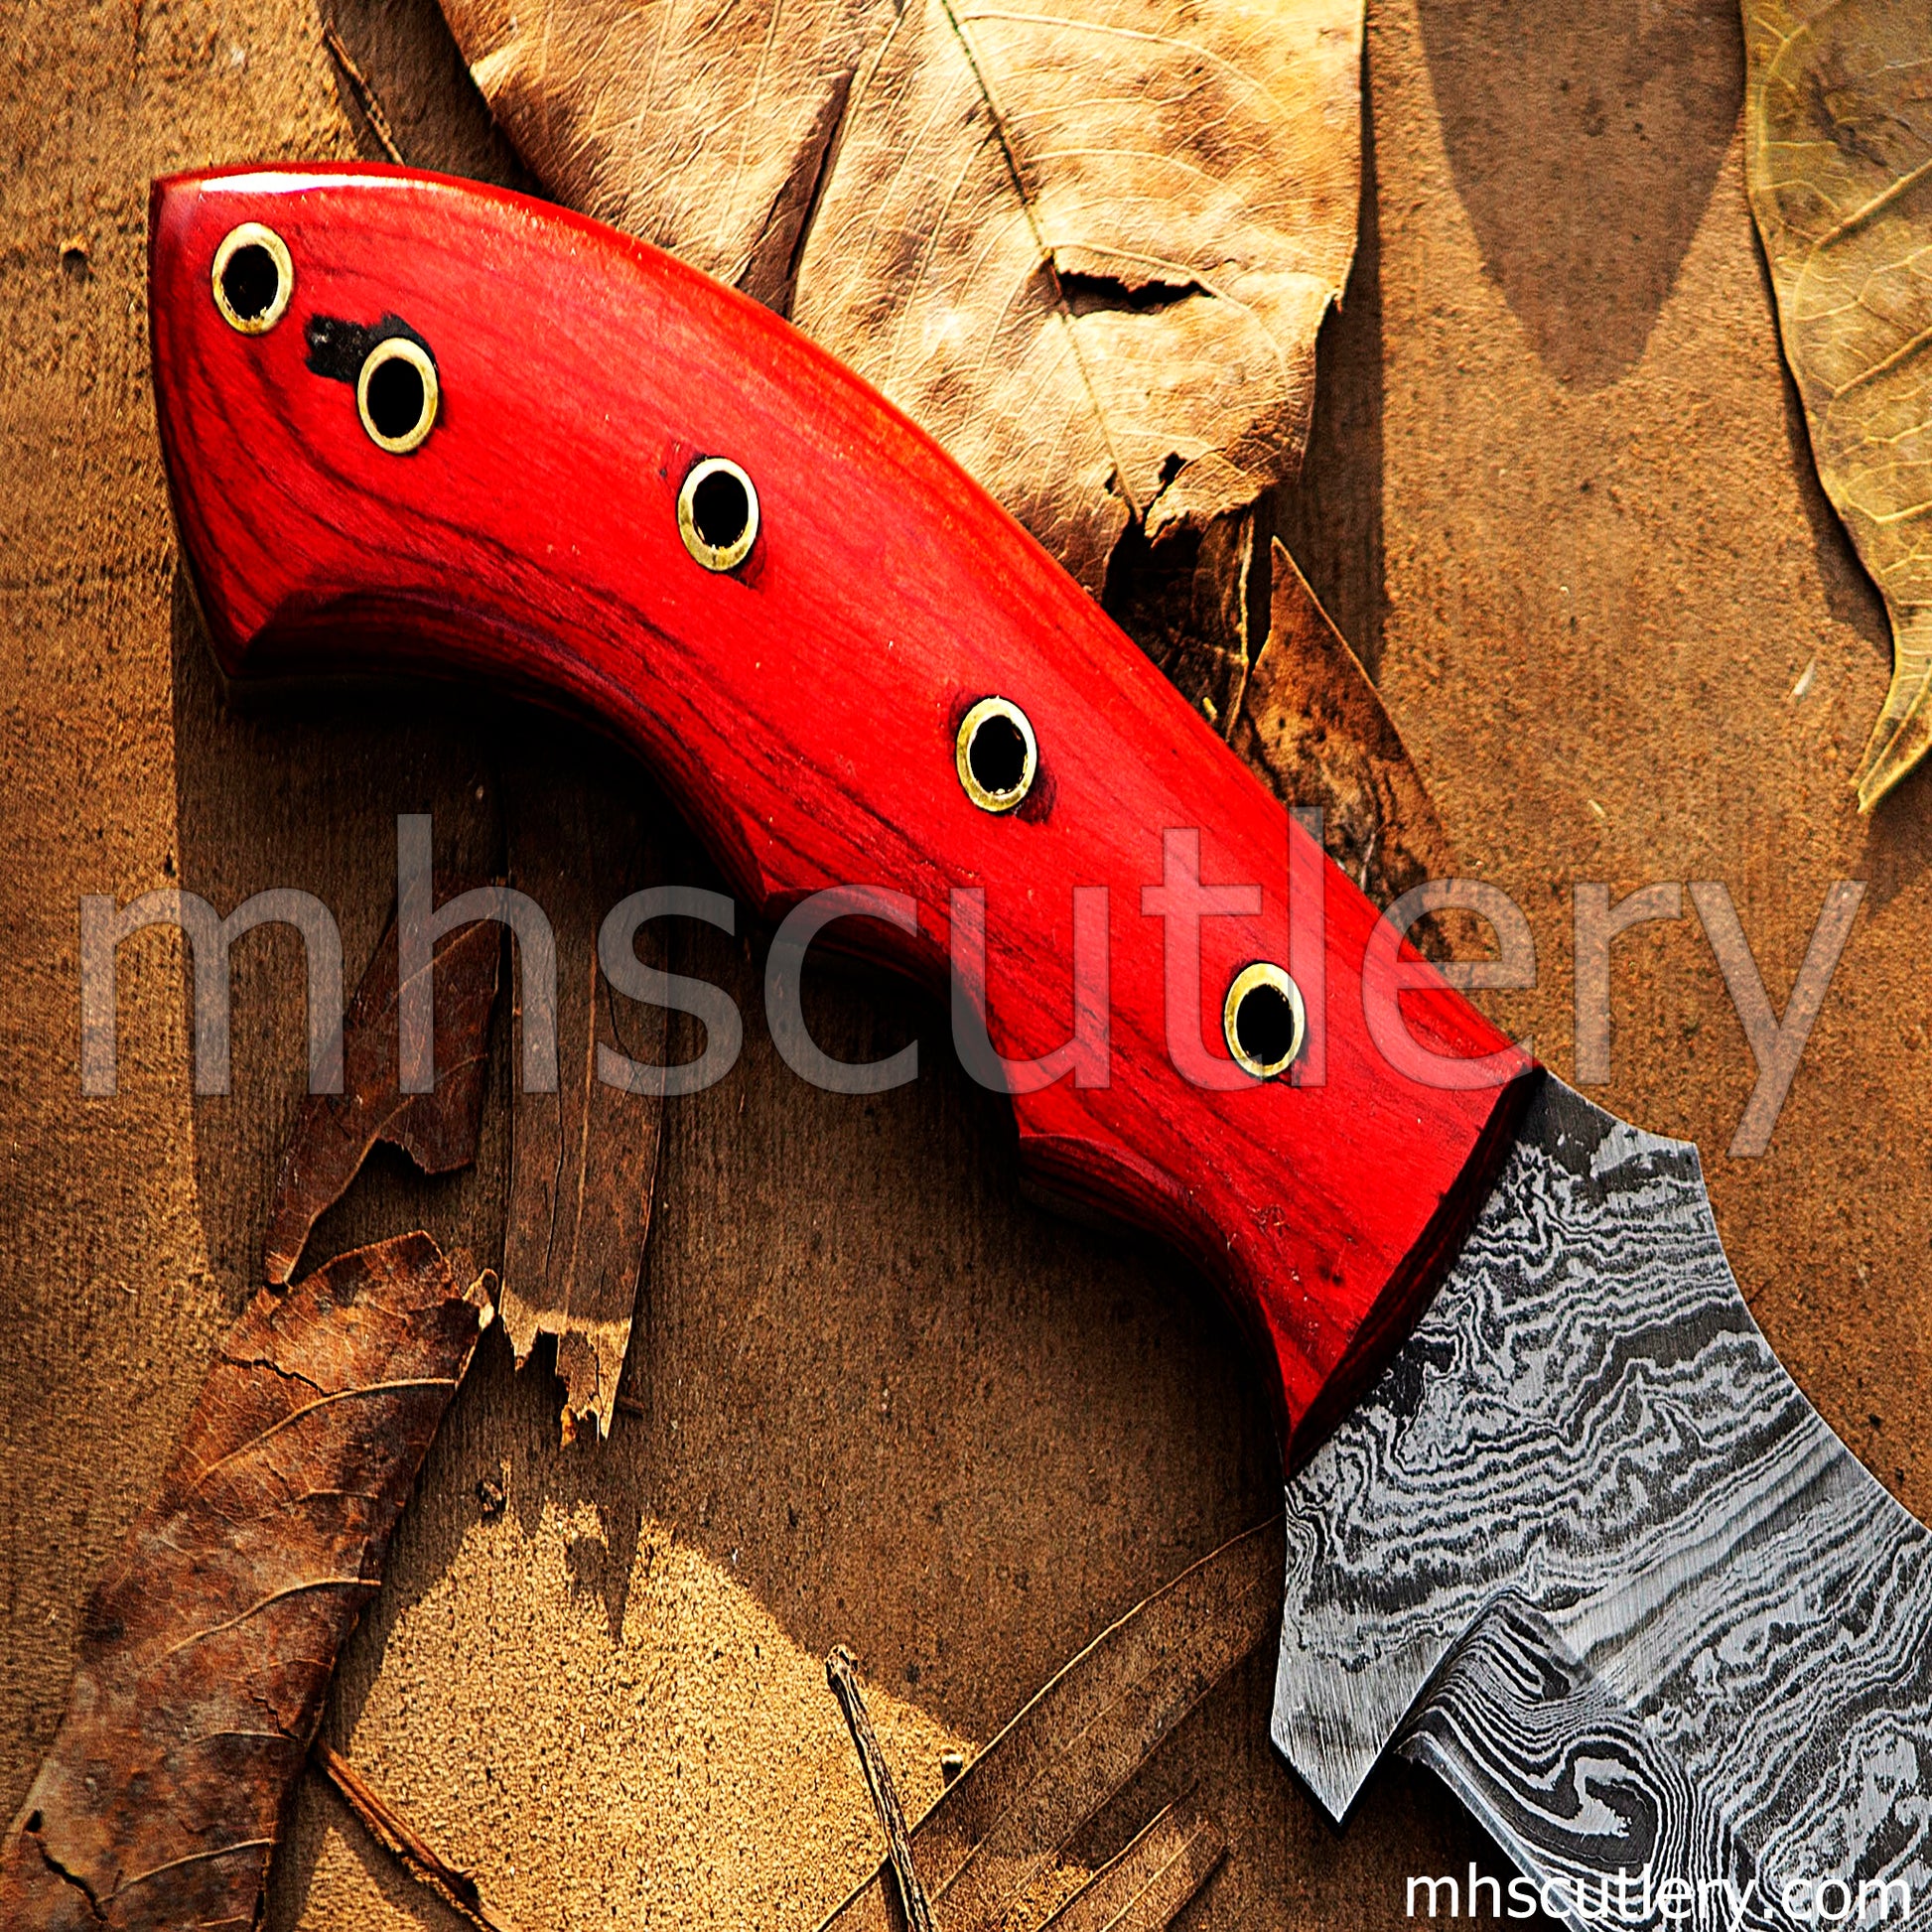 Damascus Steel Survival Tracker Knife | mhscutlery